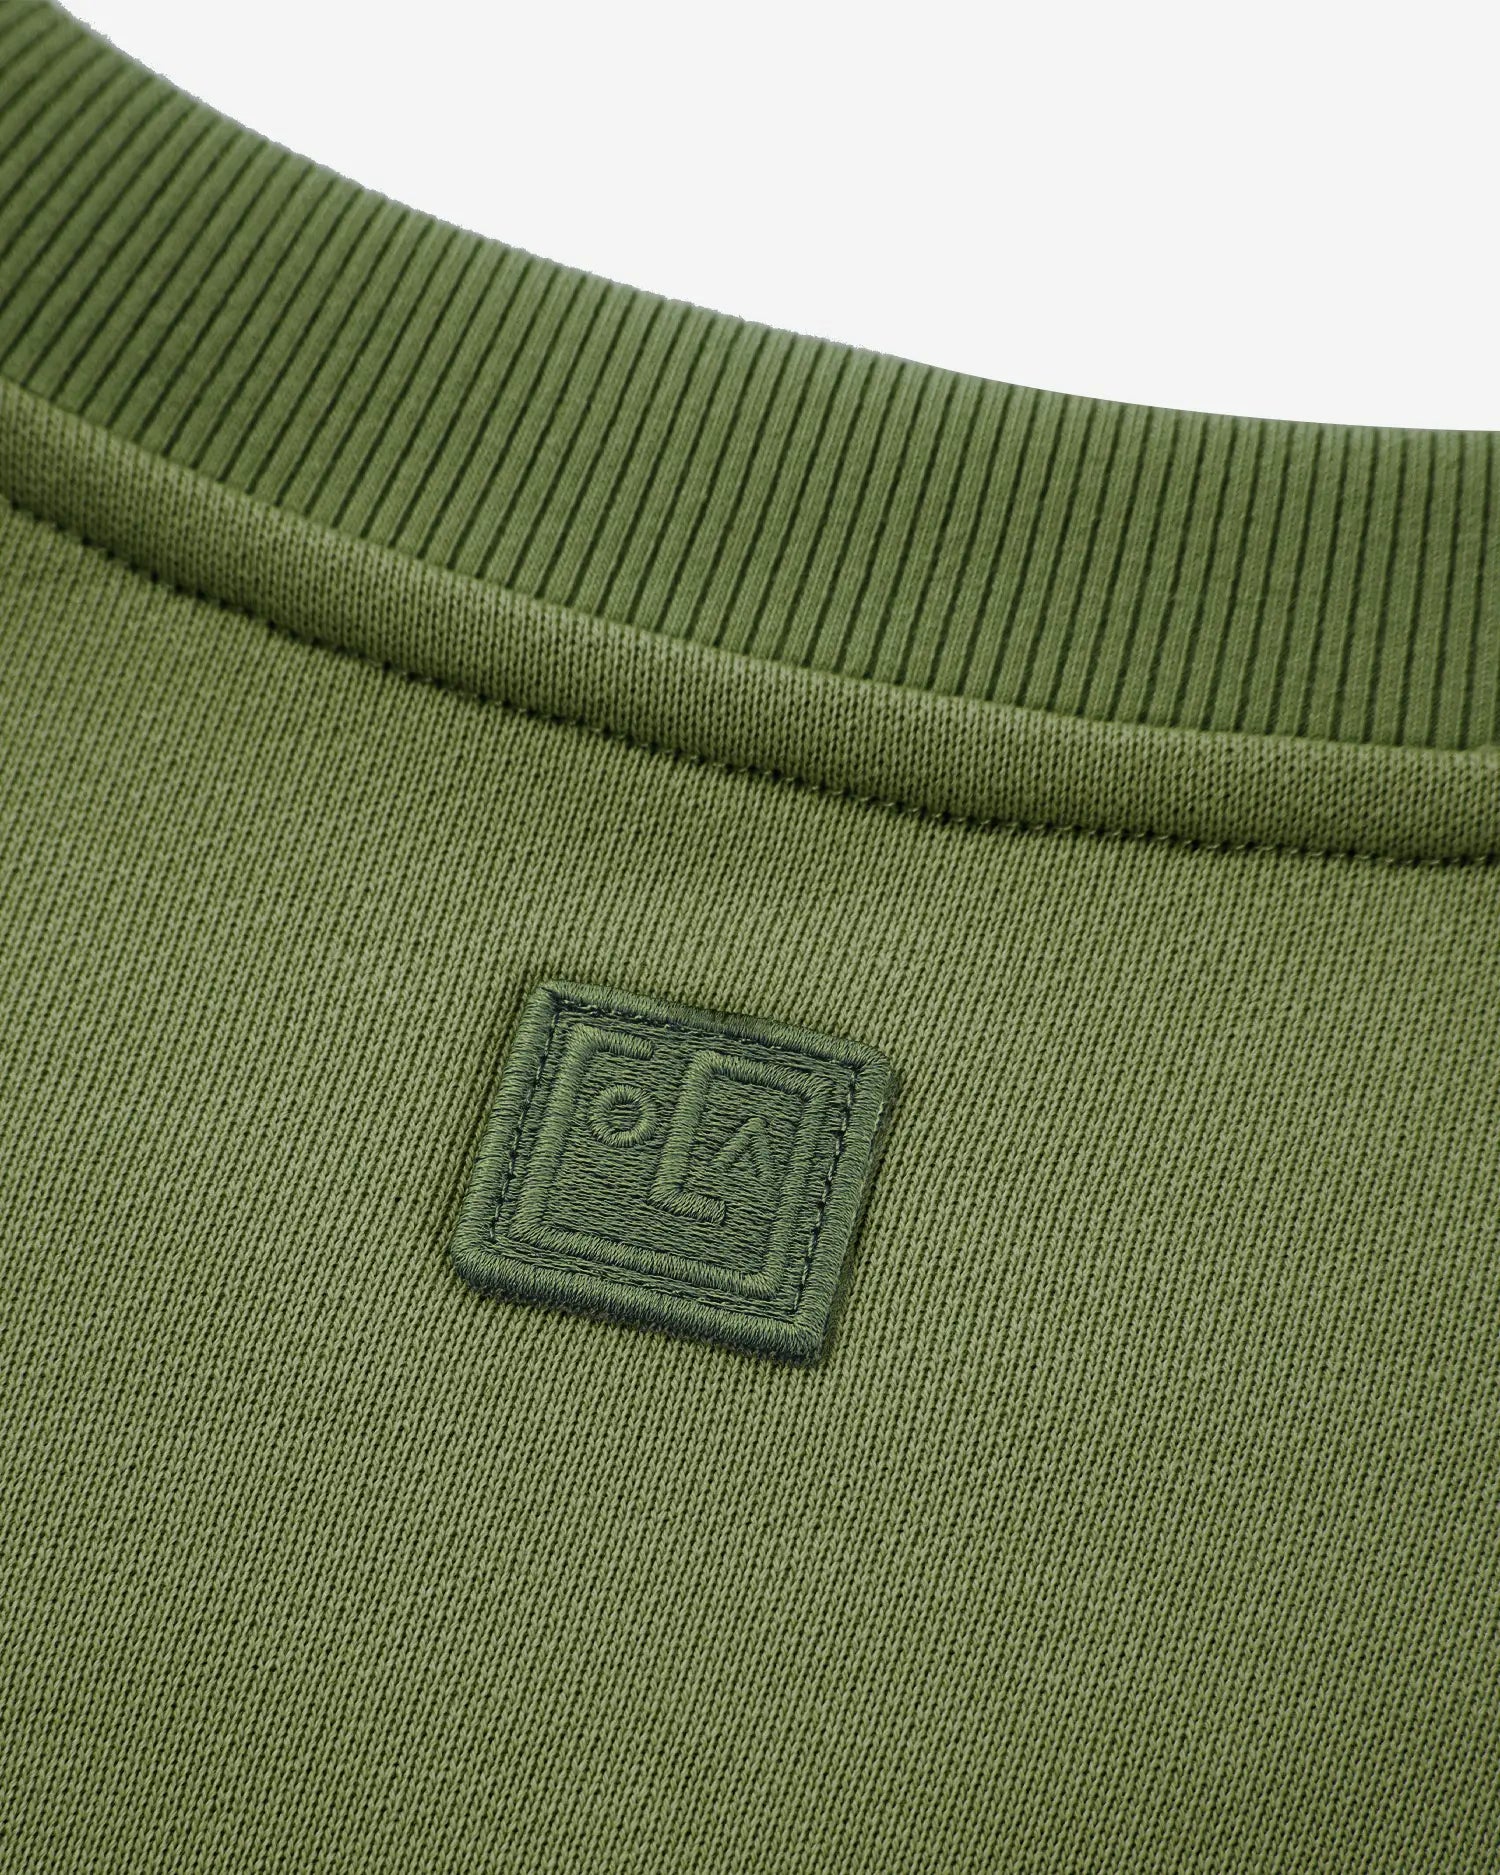 Women's Mixed Fabric Crew Sweatshirt in Military Green 09 #military-green